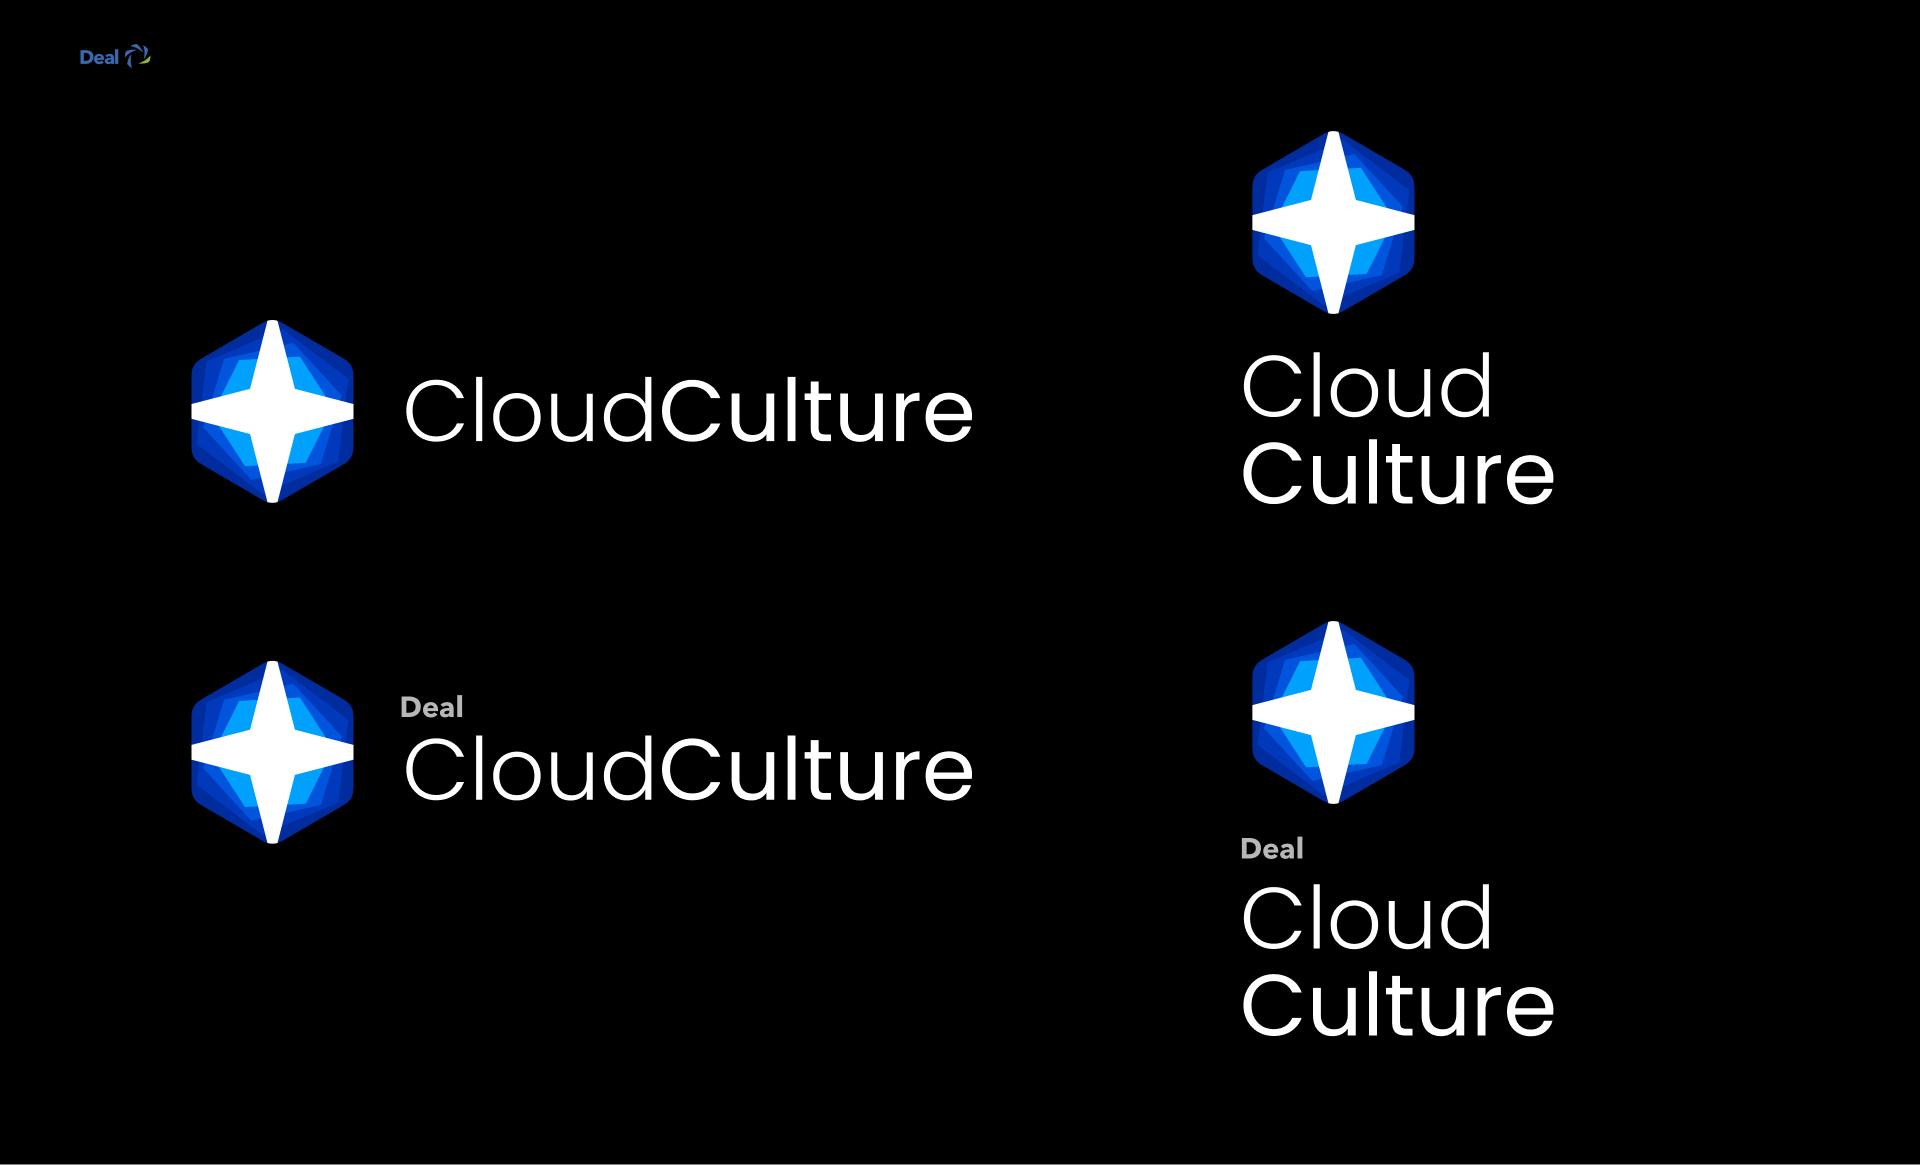 Cloud culture branding over a dark background